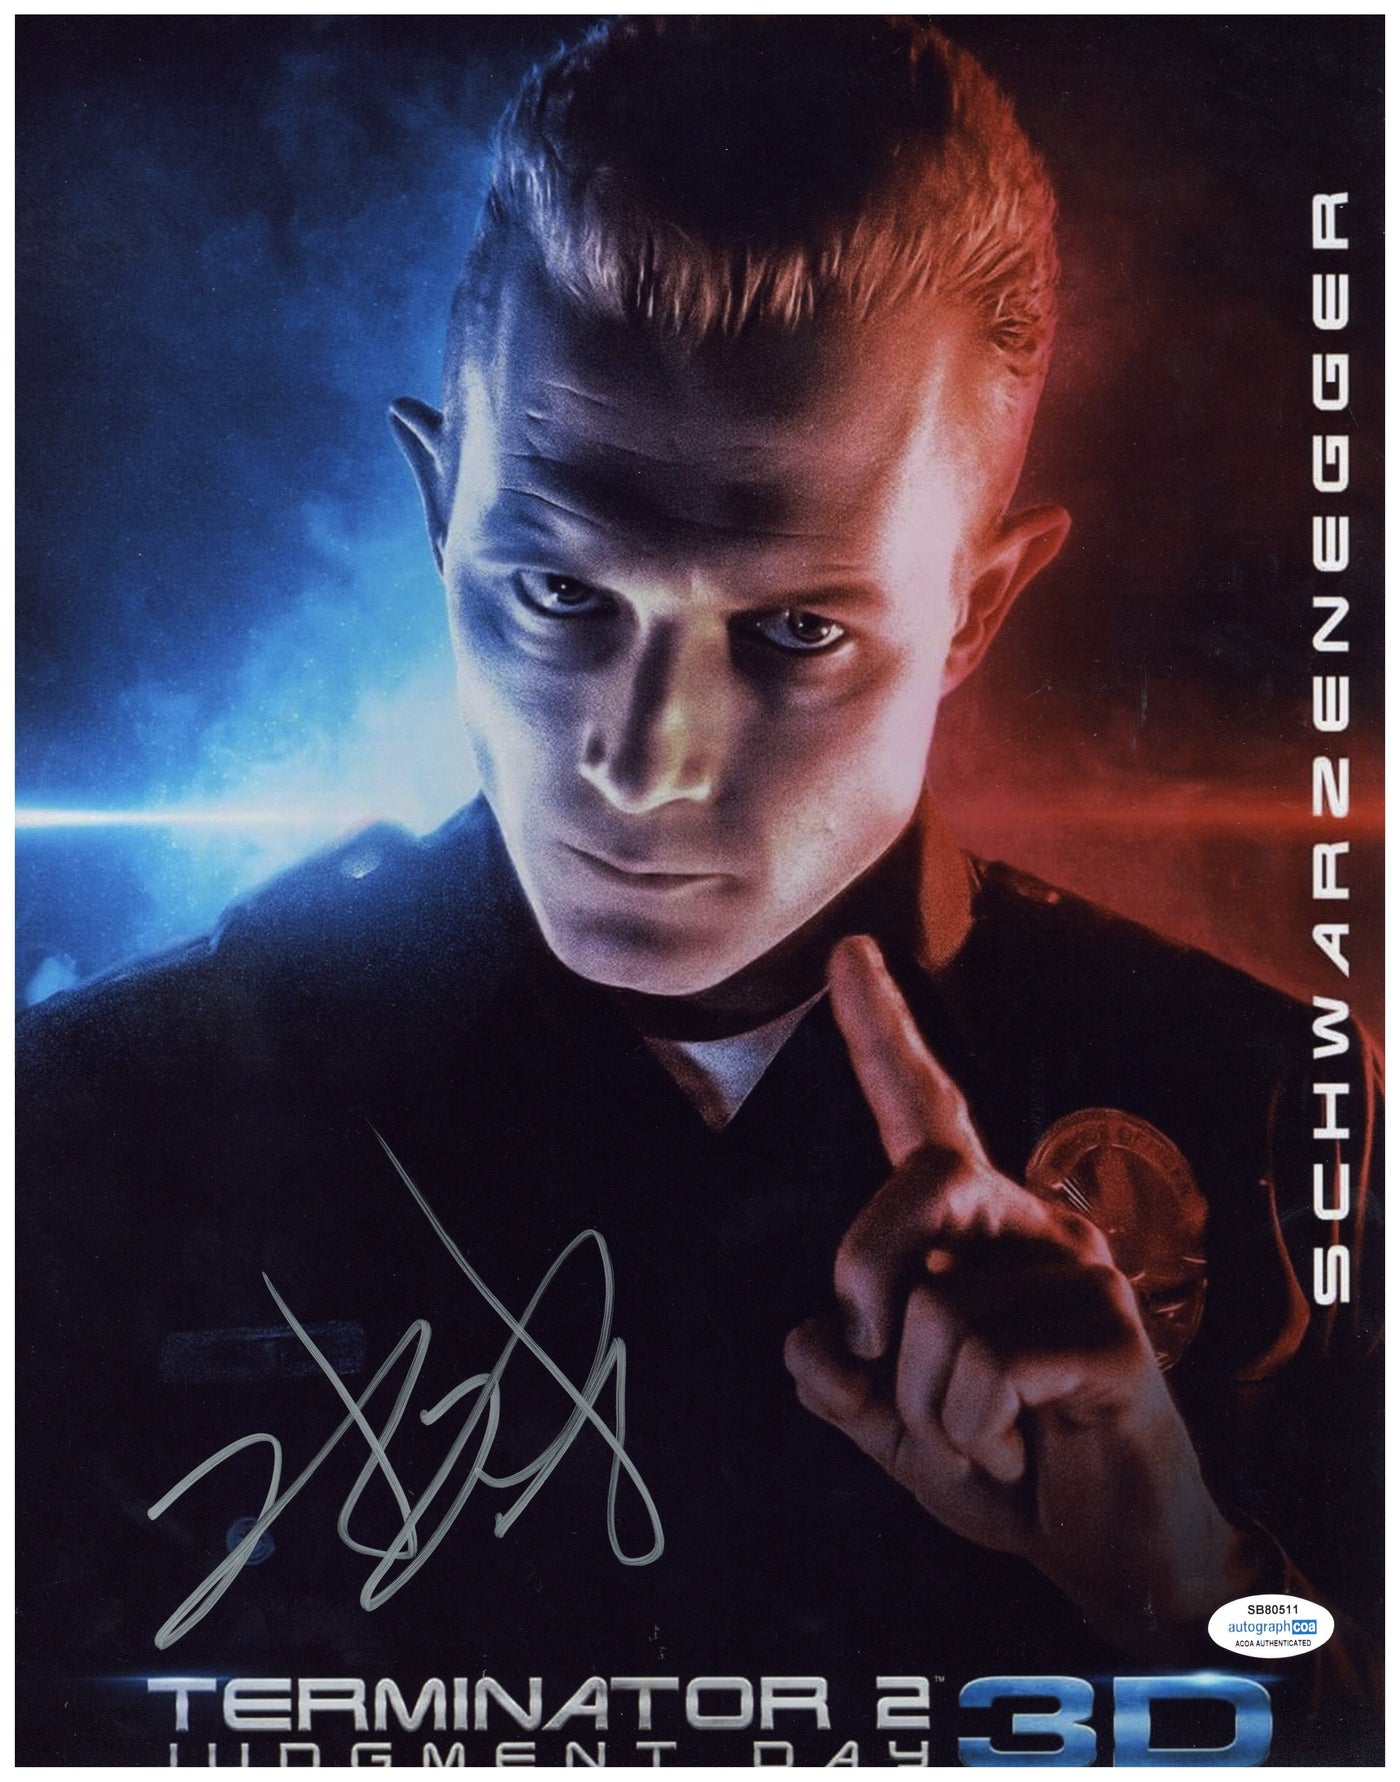 Robert Patrick Signed 11x14 Photo Terminator Autographed ACOA